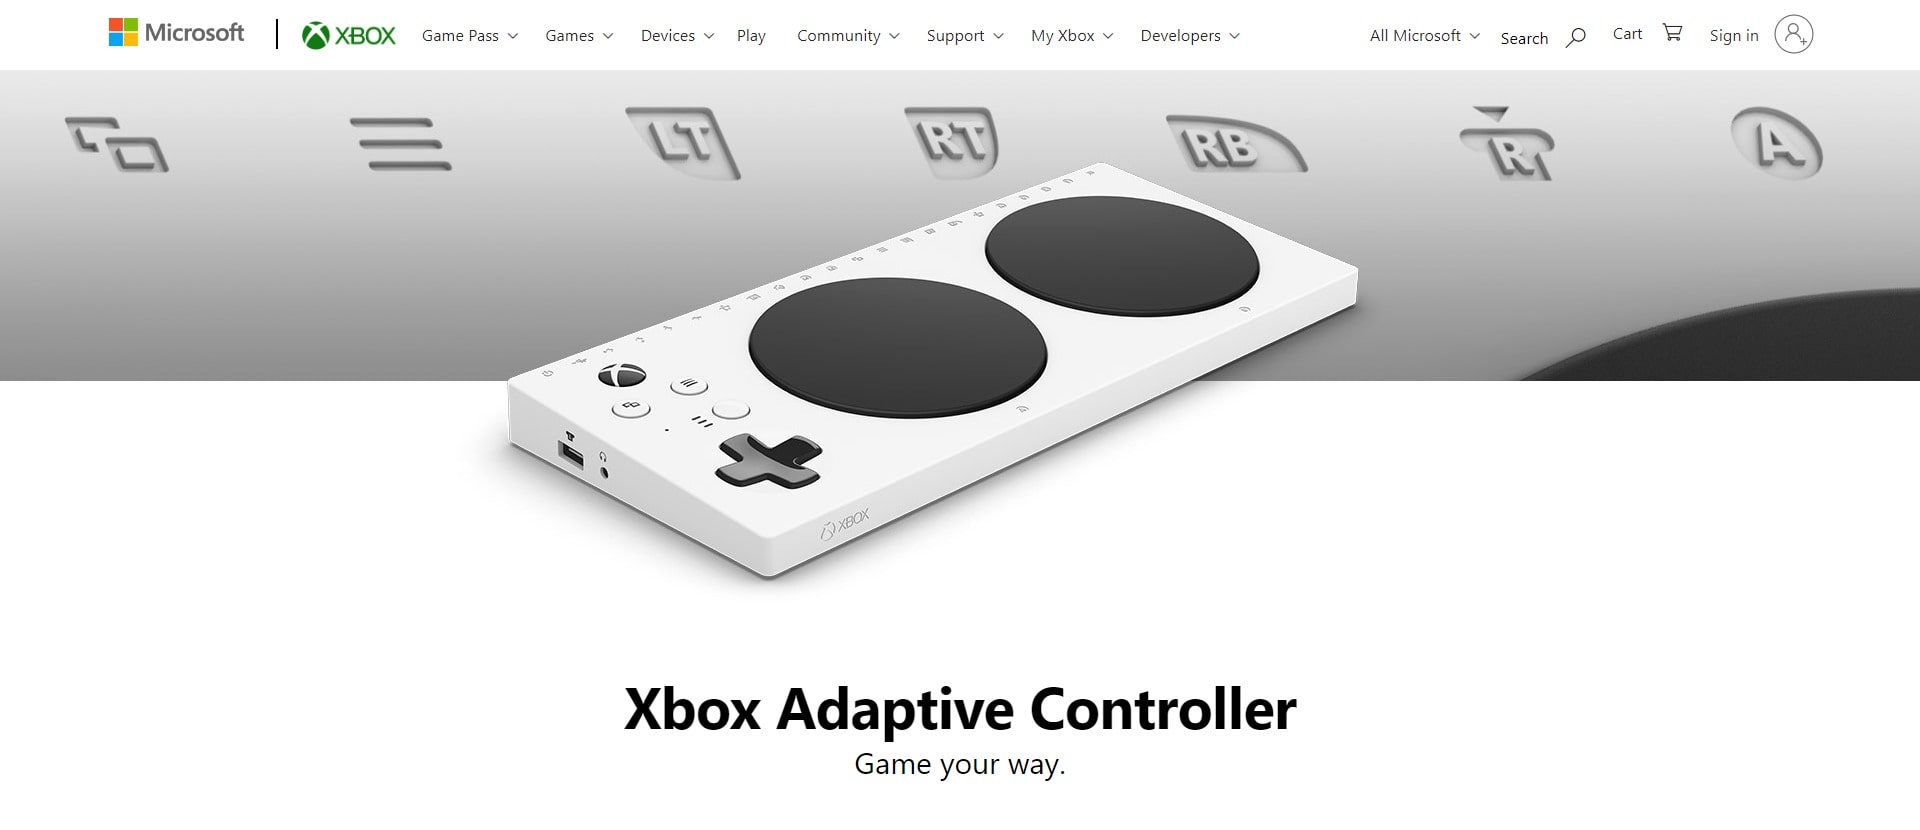 empathic design examples, xbox adaptive controller